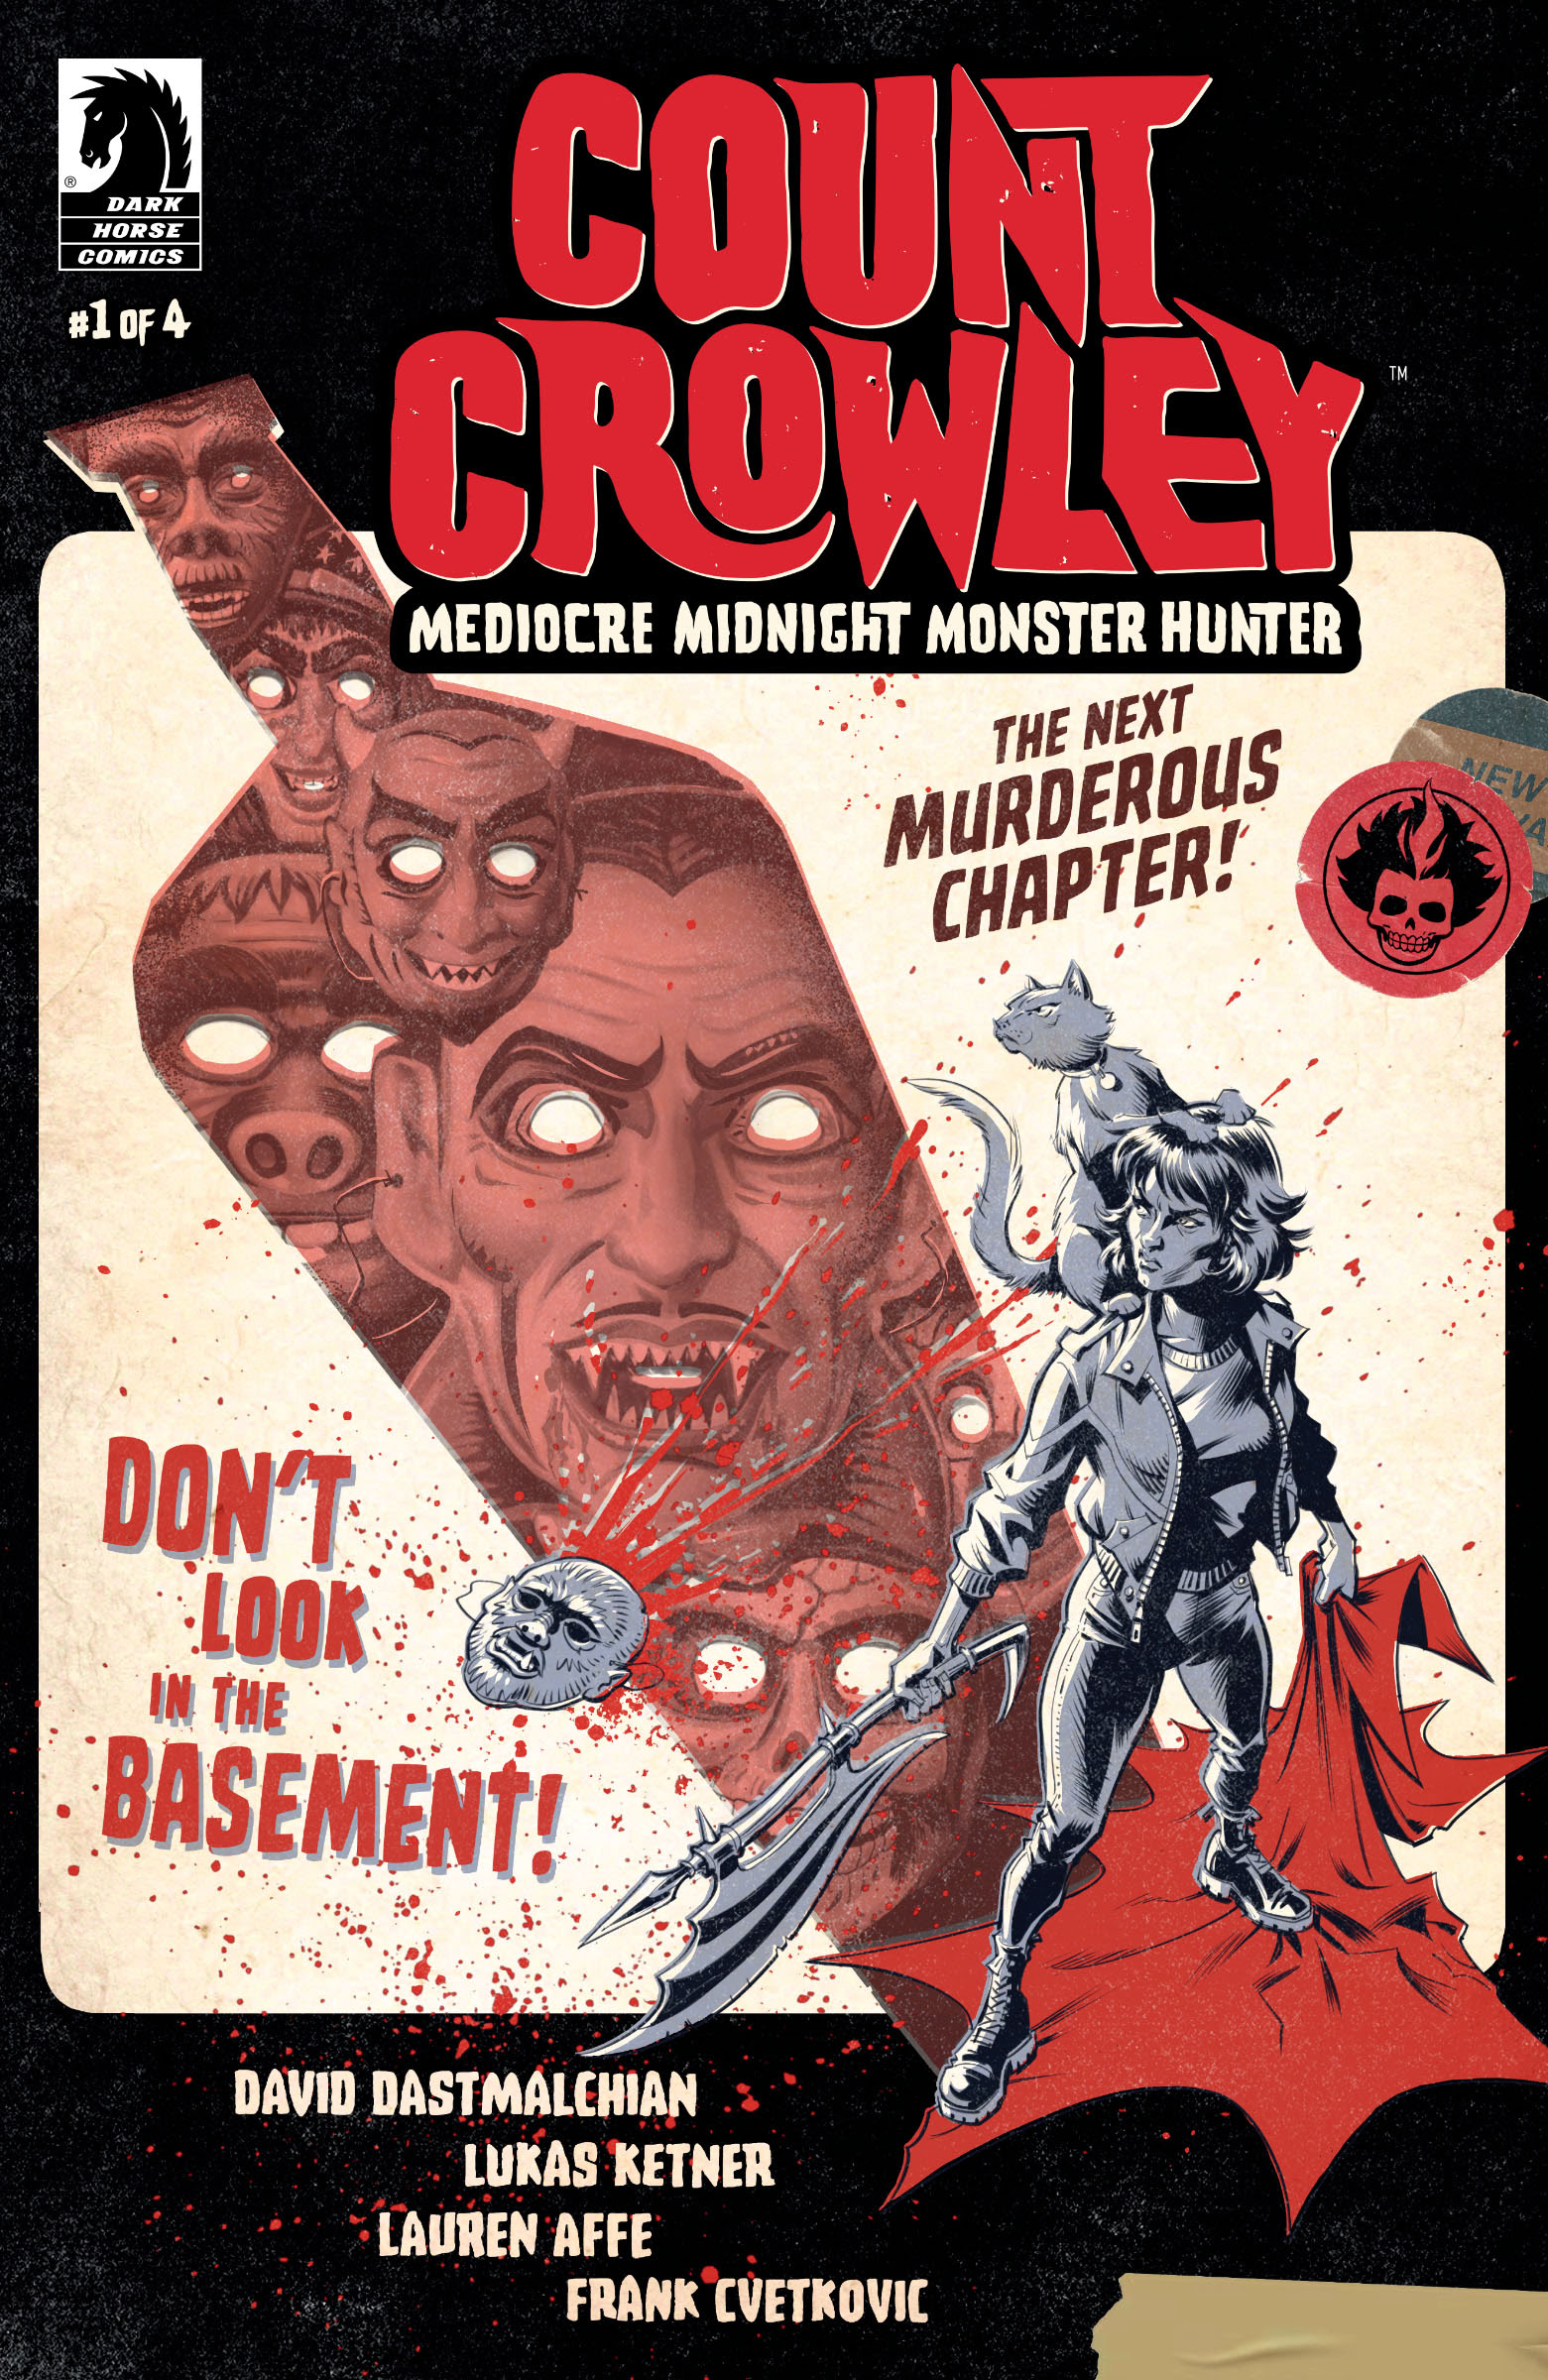 Count Crowley: Mediocre Midnight Monster Hunter #1 CVR A KETNER